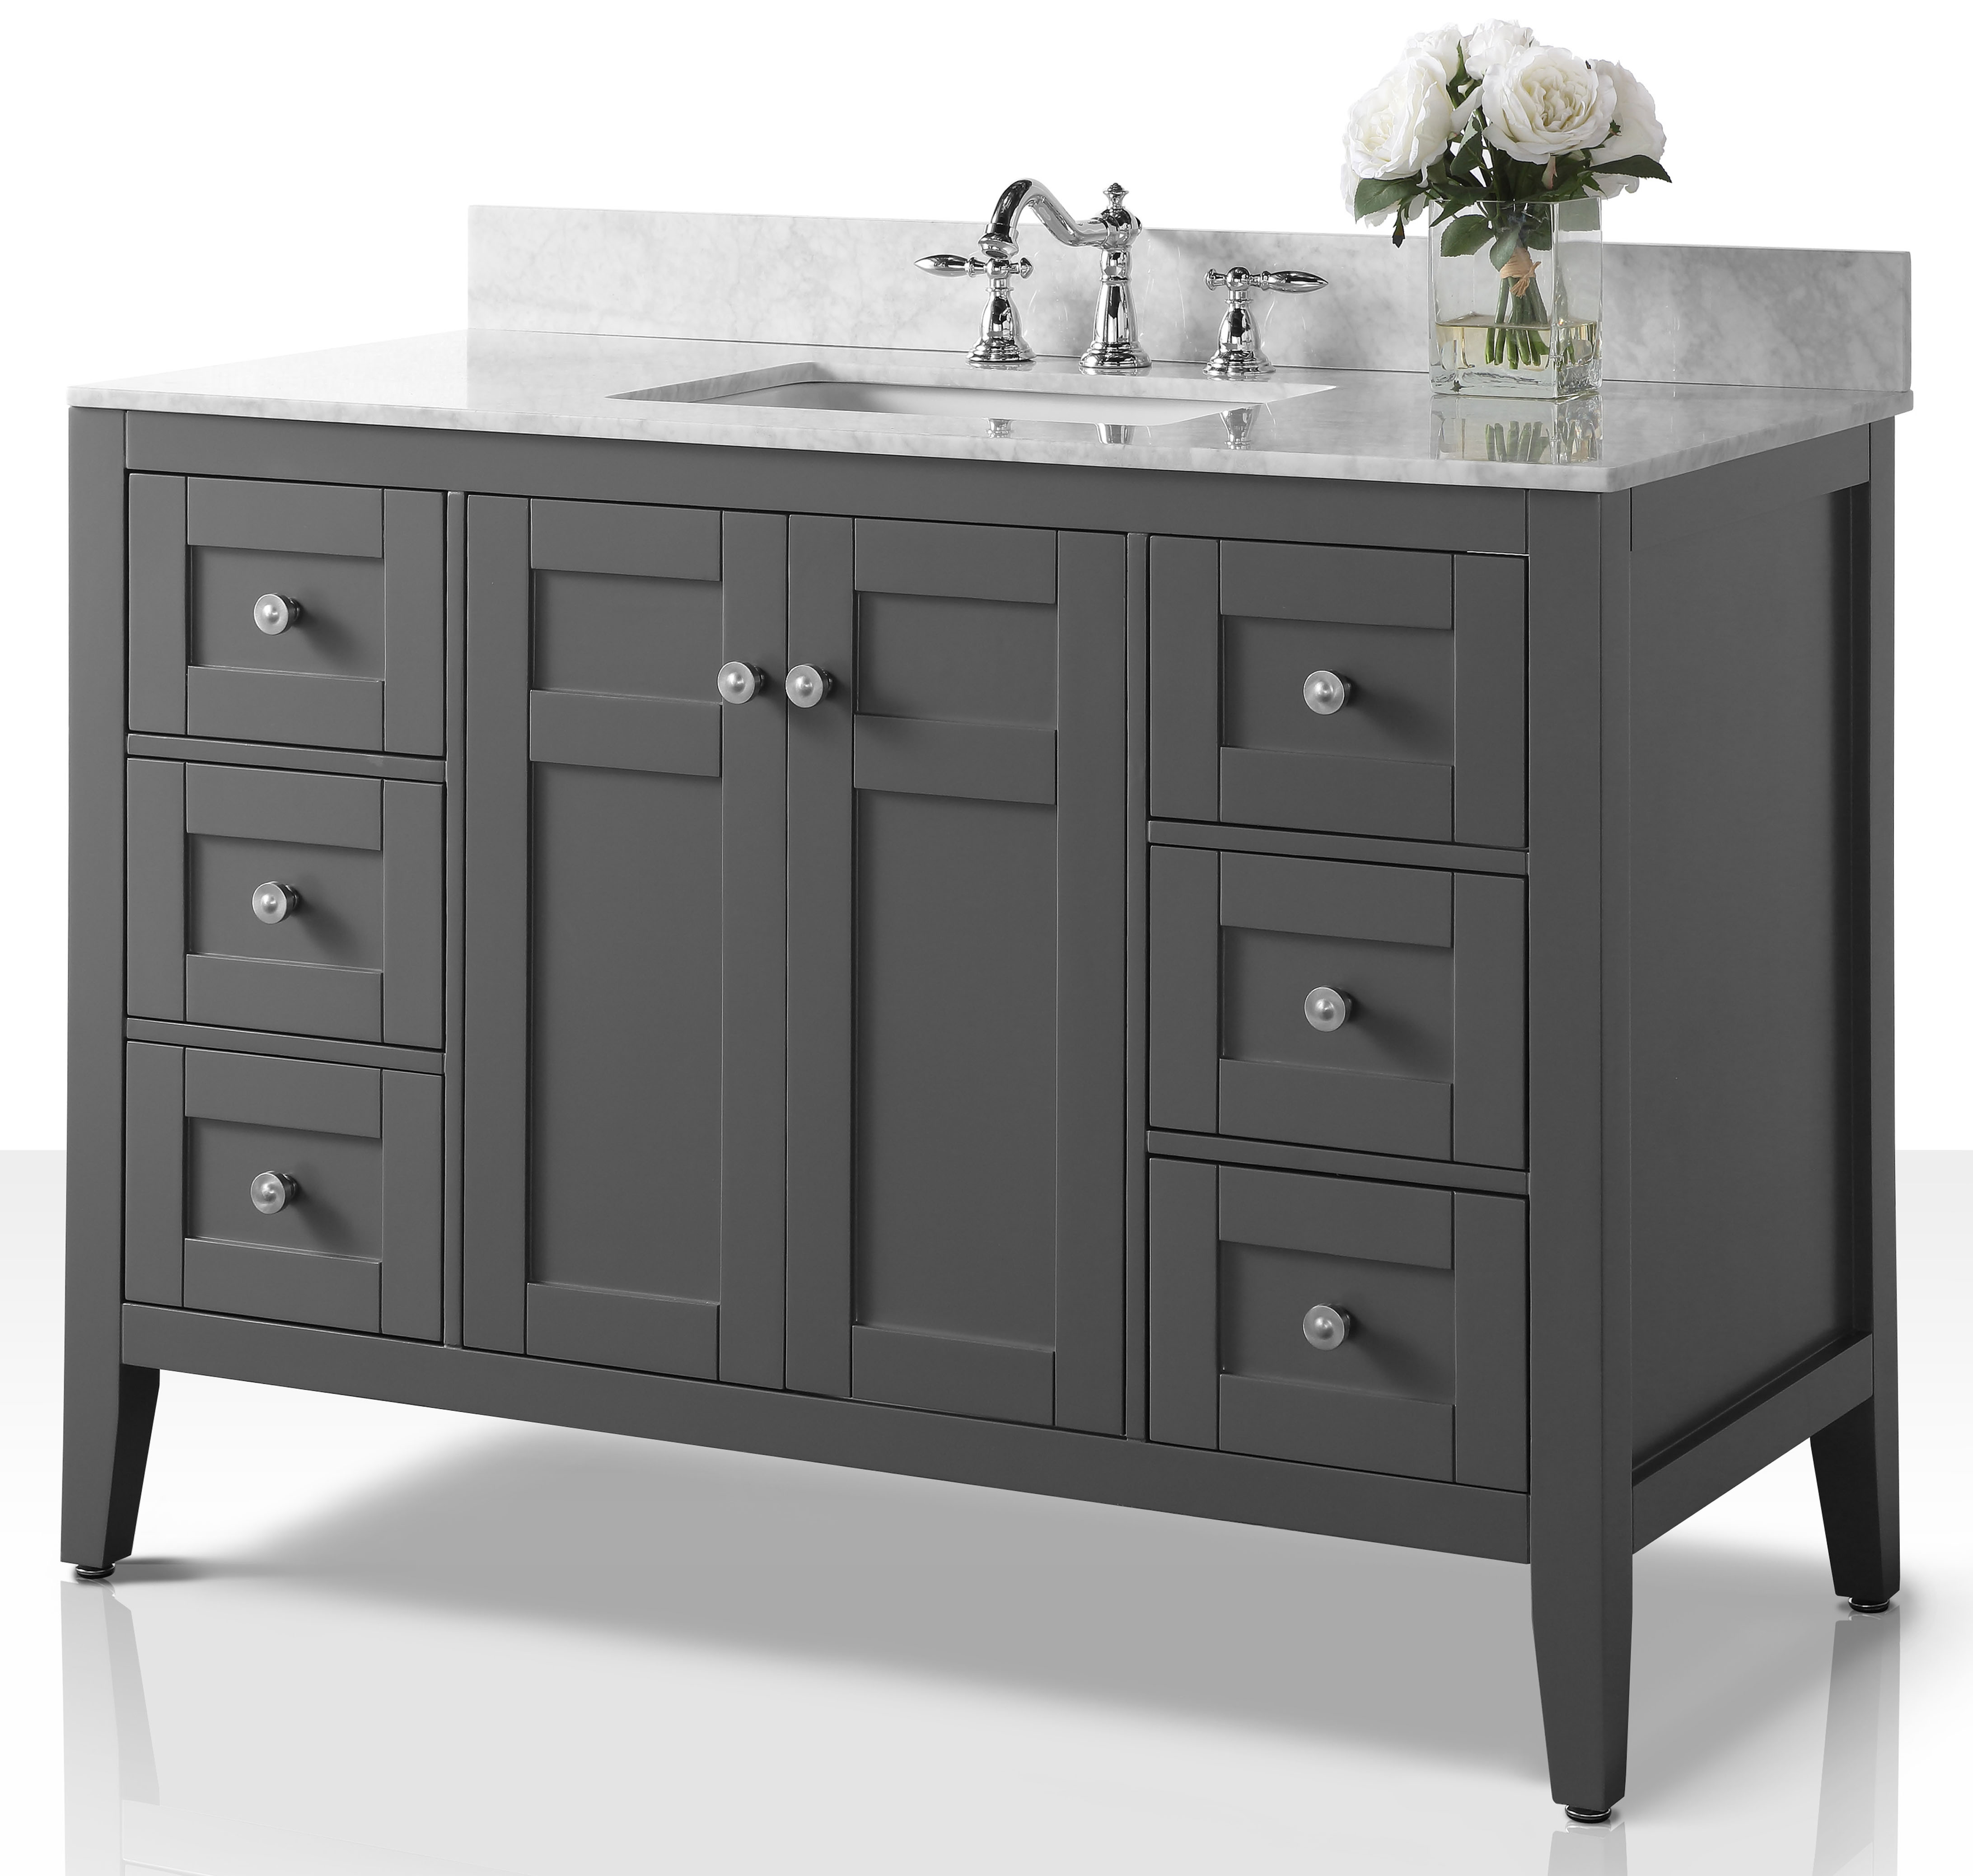 48" Single Sink Bathroom Vanity Set in Sapphire Gray Finish with Italian Carrara White Marble Vanity top and White Undermount Basin